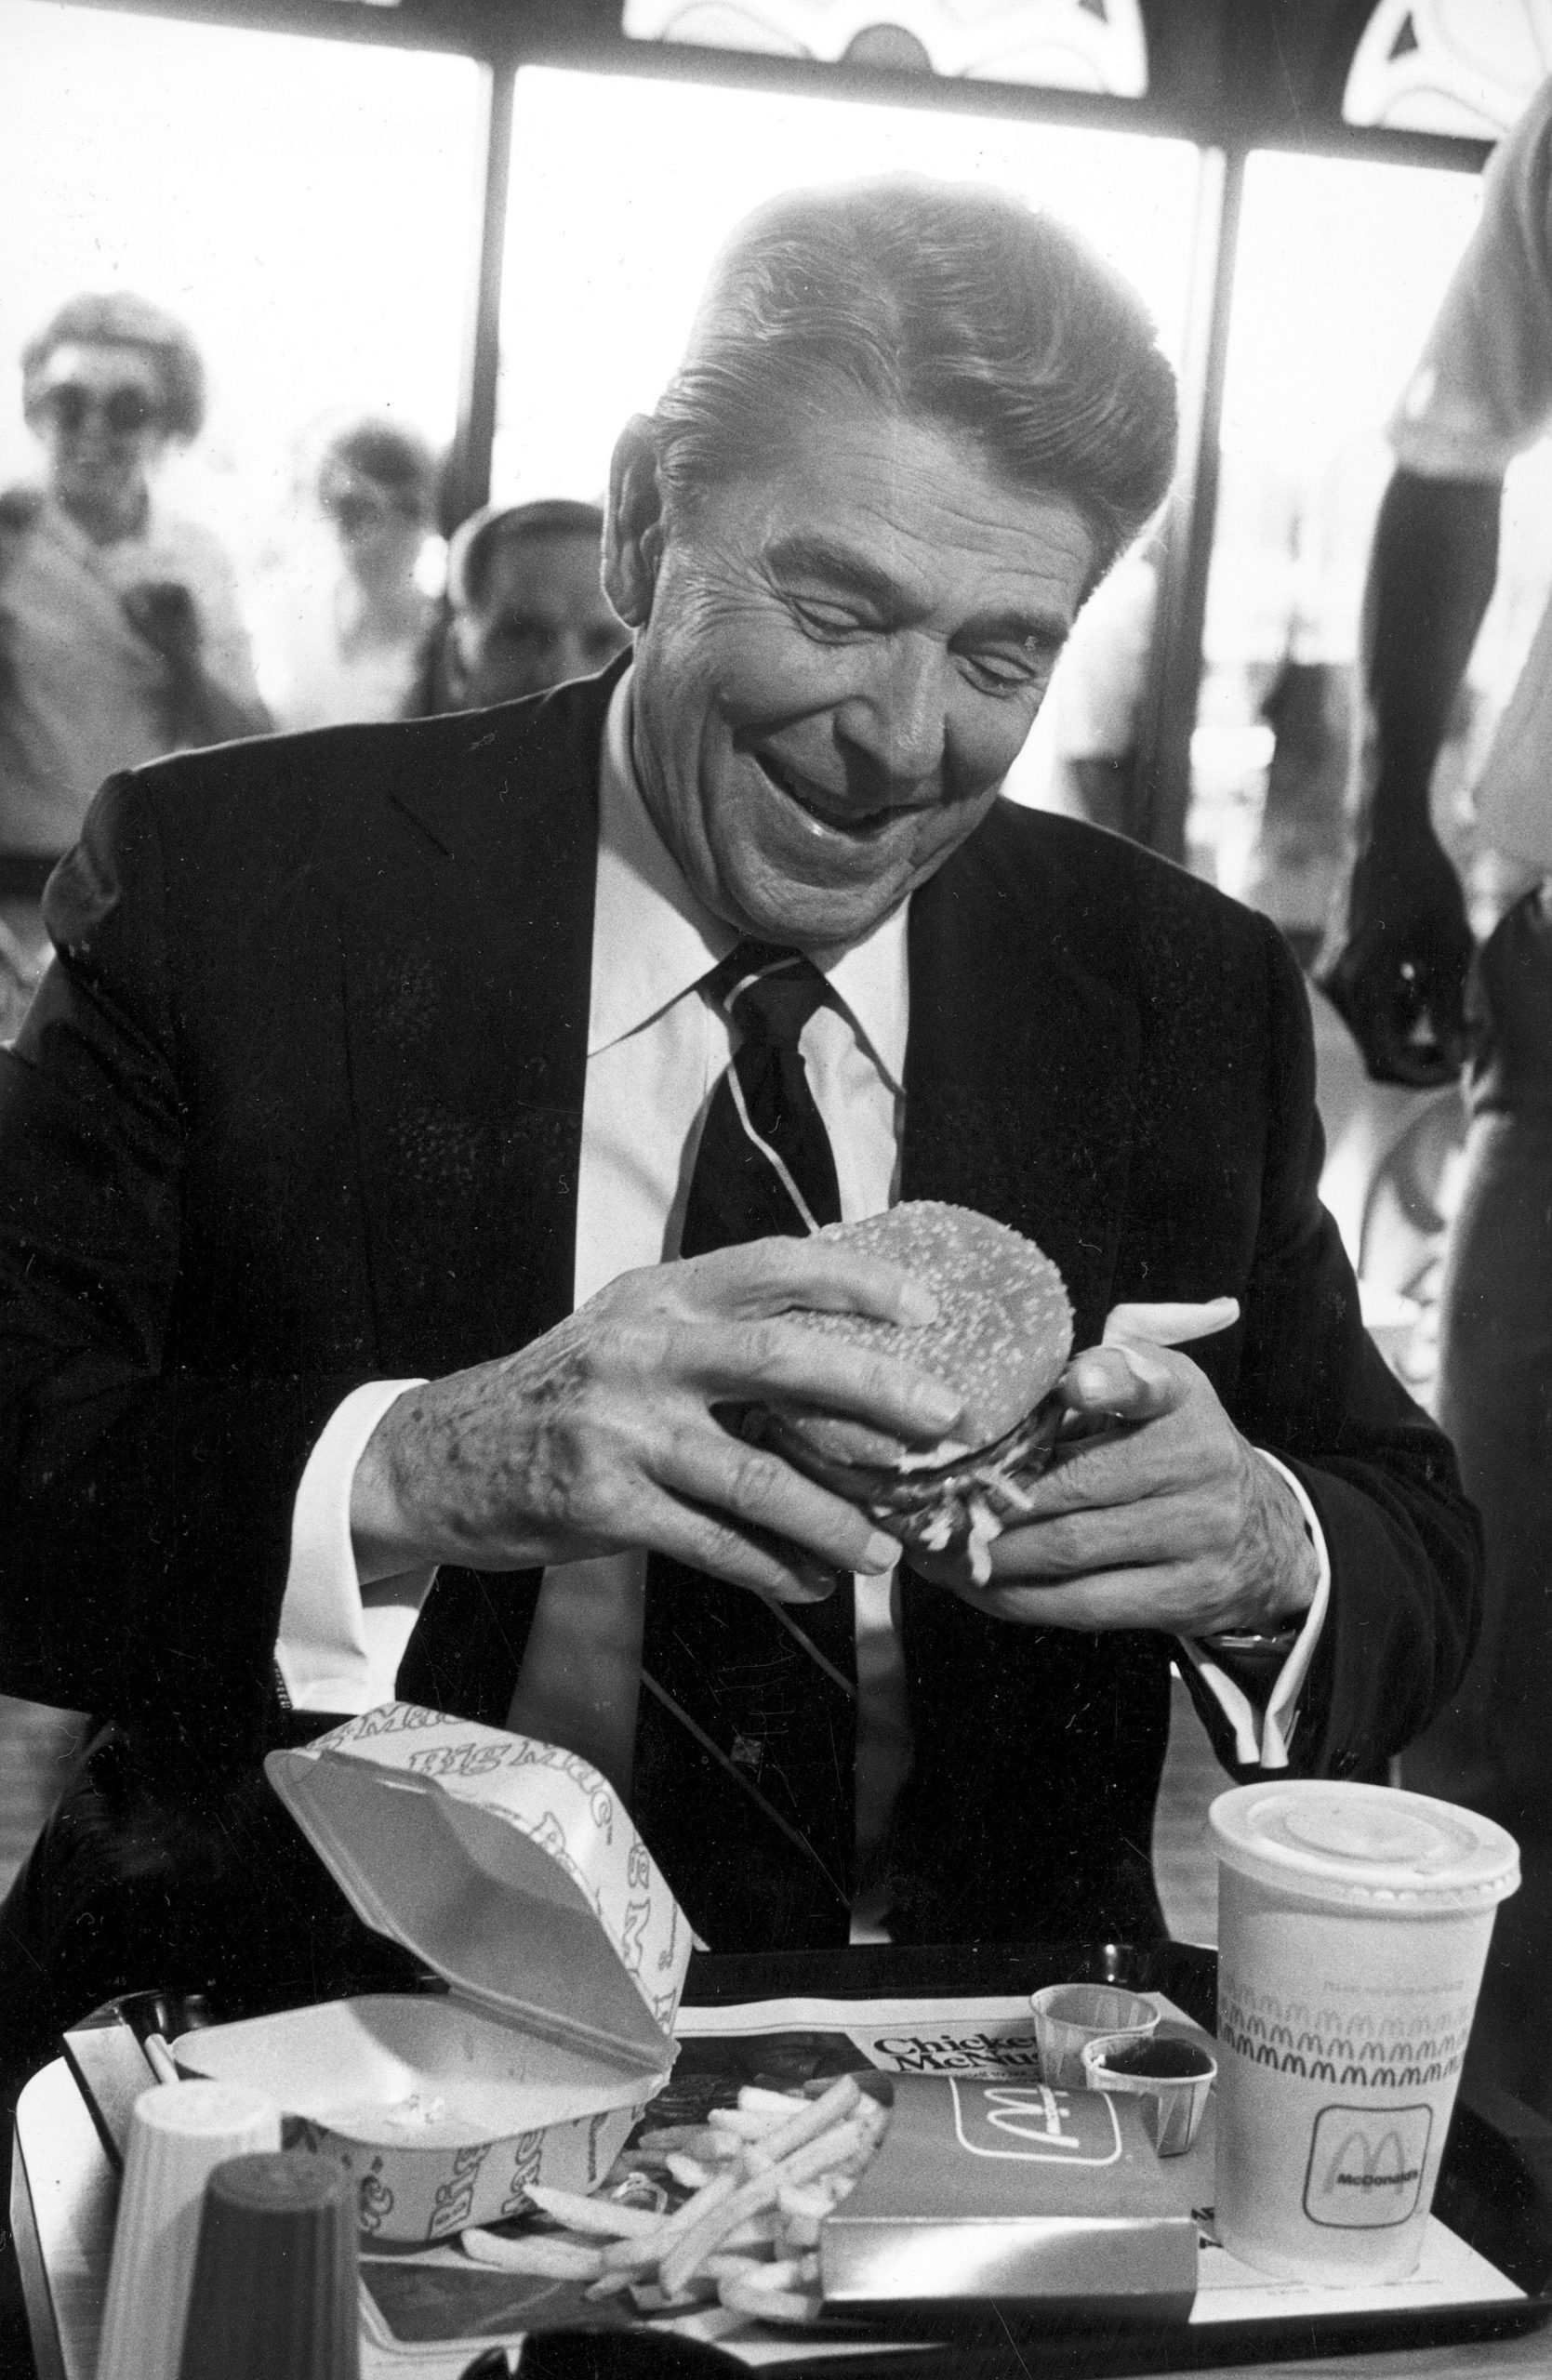 U.S. President Ronald Reagan eats at a McDonald's restaurant after addressing students at the University of Alabama in Tuscaloosa, Ala., on Oct. 16, 1984. (Photo: Lana Harris, AP)